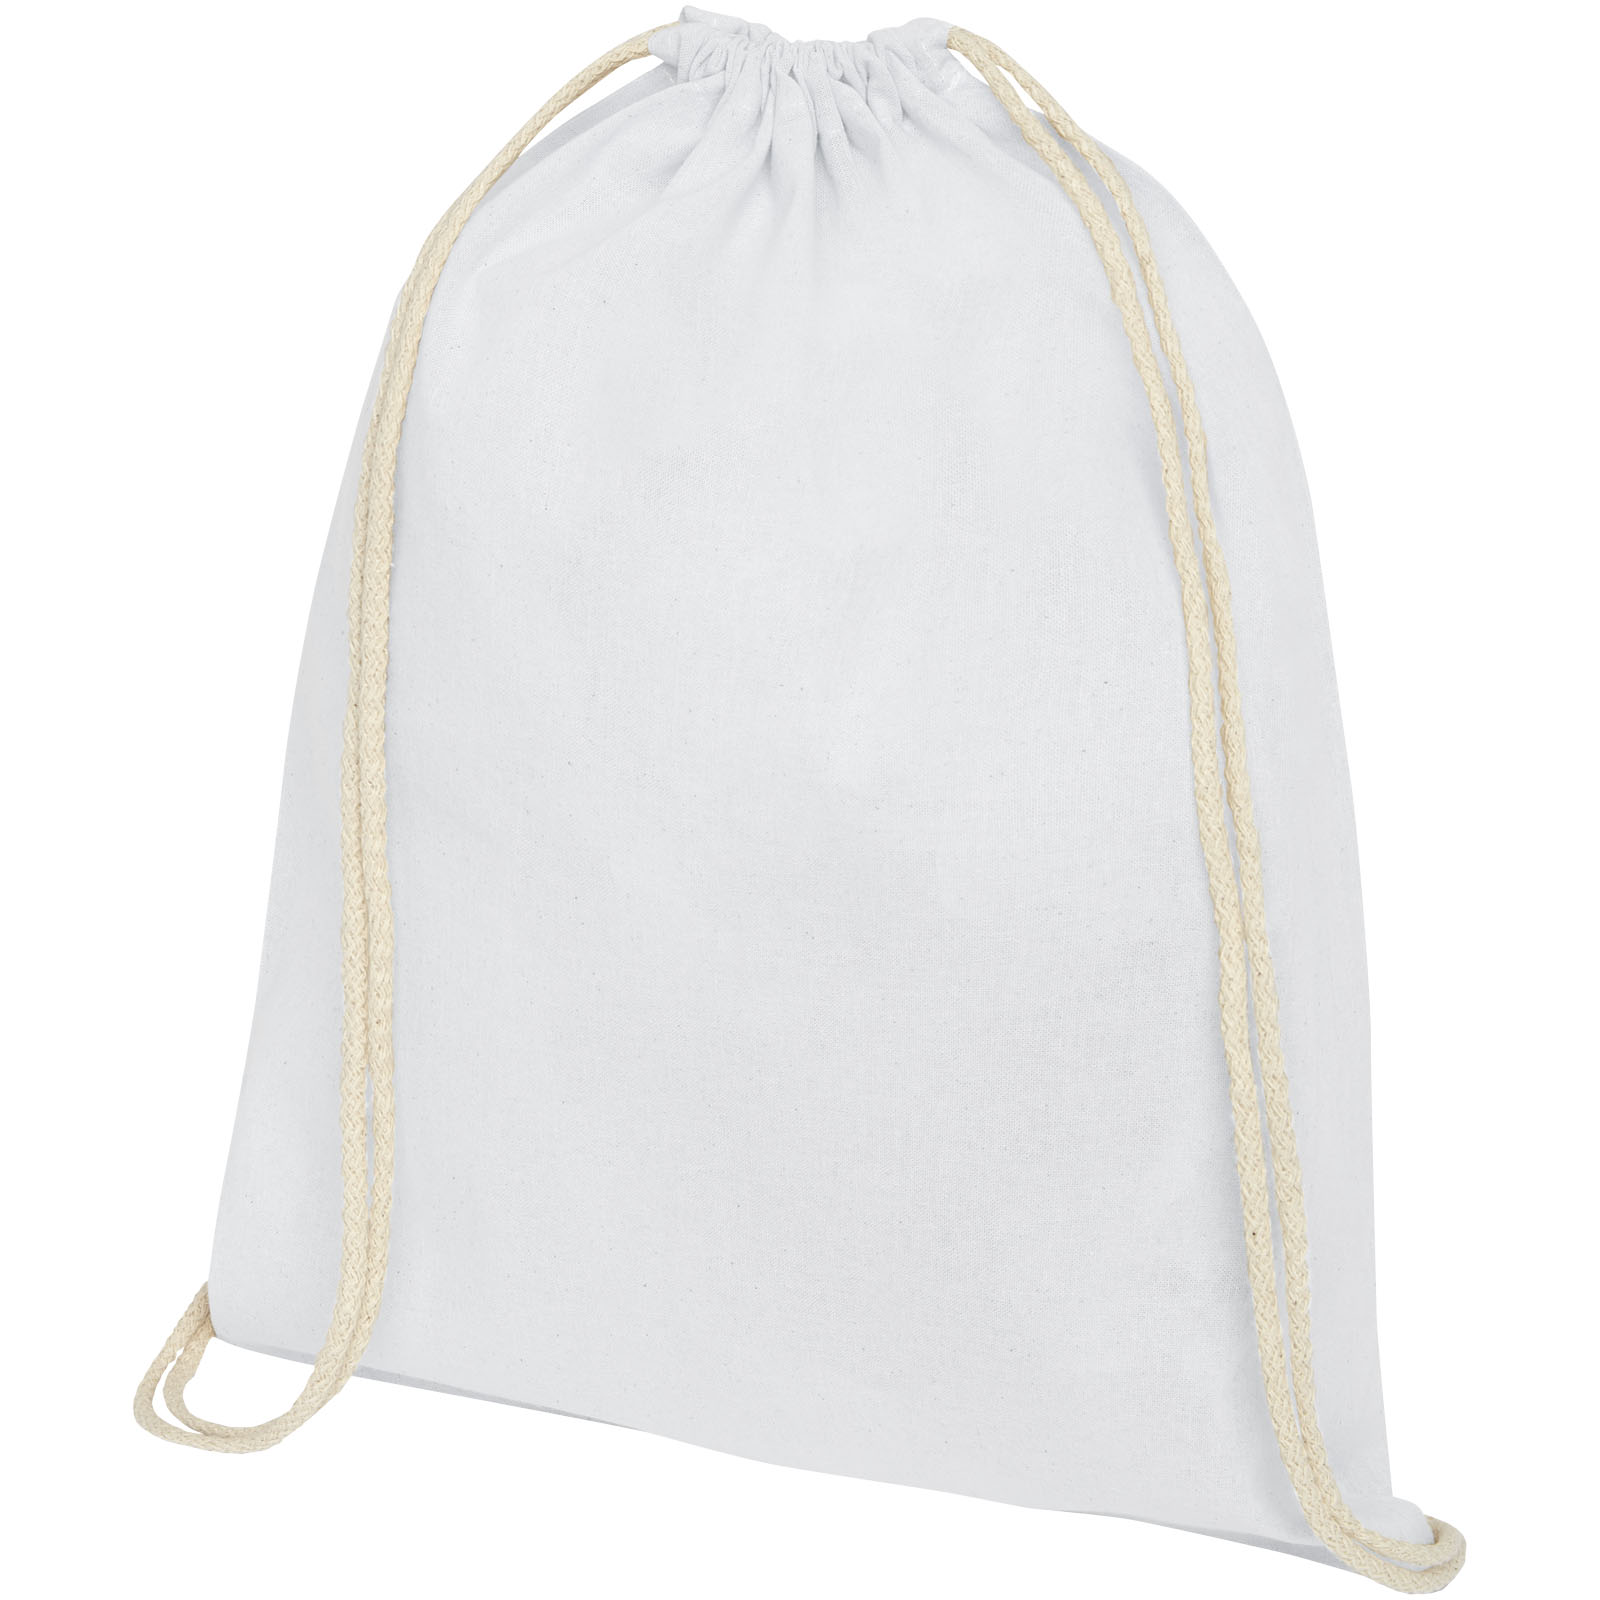 Durable Drawstring Bag - Little Baddow - Bishops Waltham